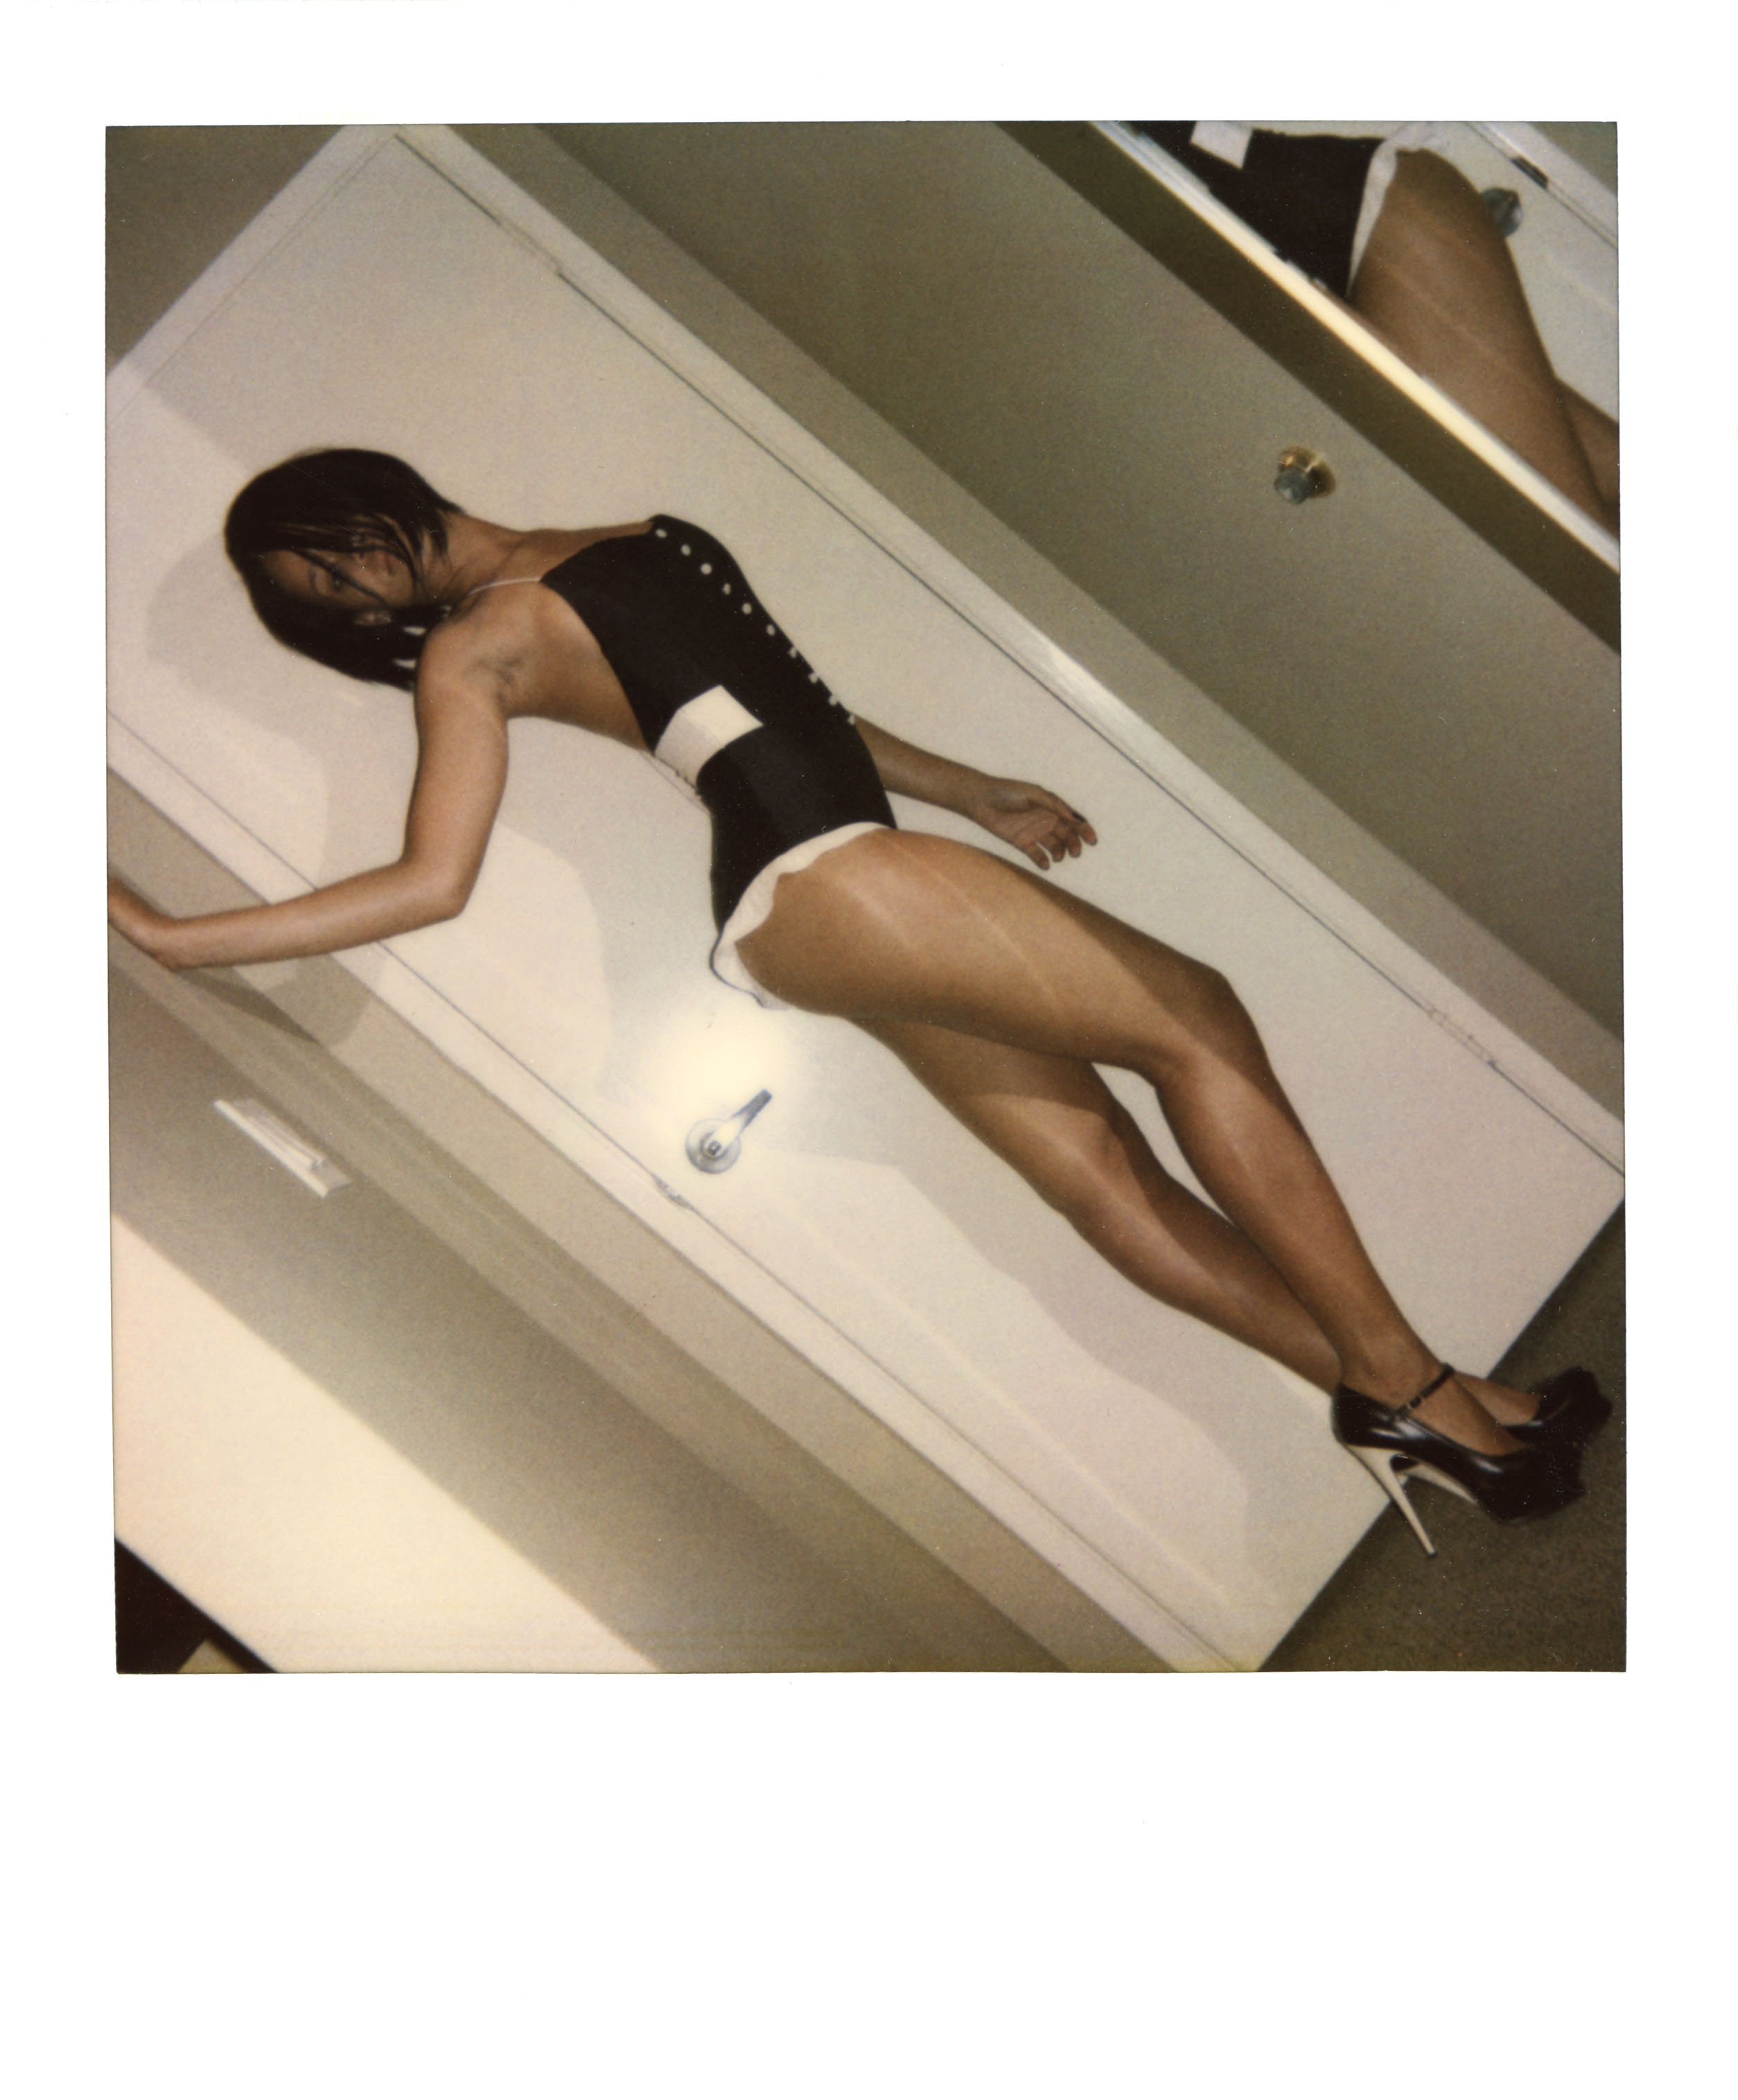 Rihanna – “Umbrella” music video wardrobe fitting Polaroid JPG NFT, Beverly Hills, 2007